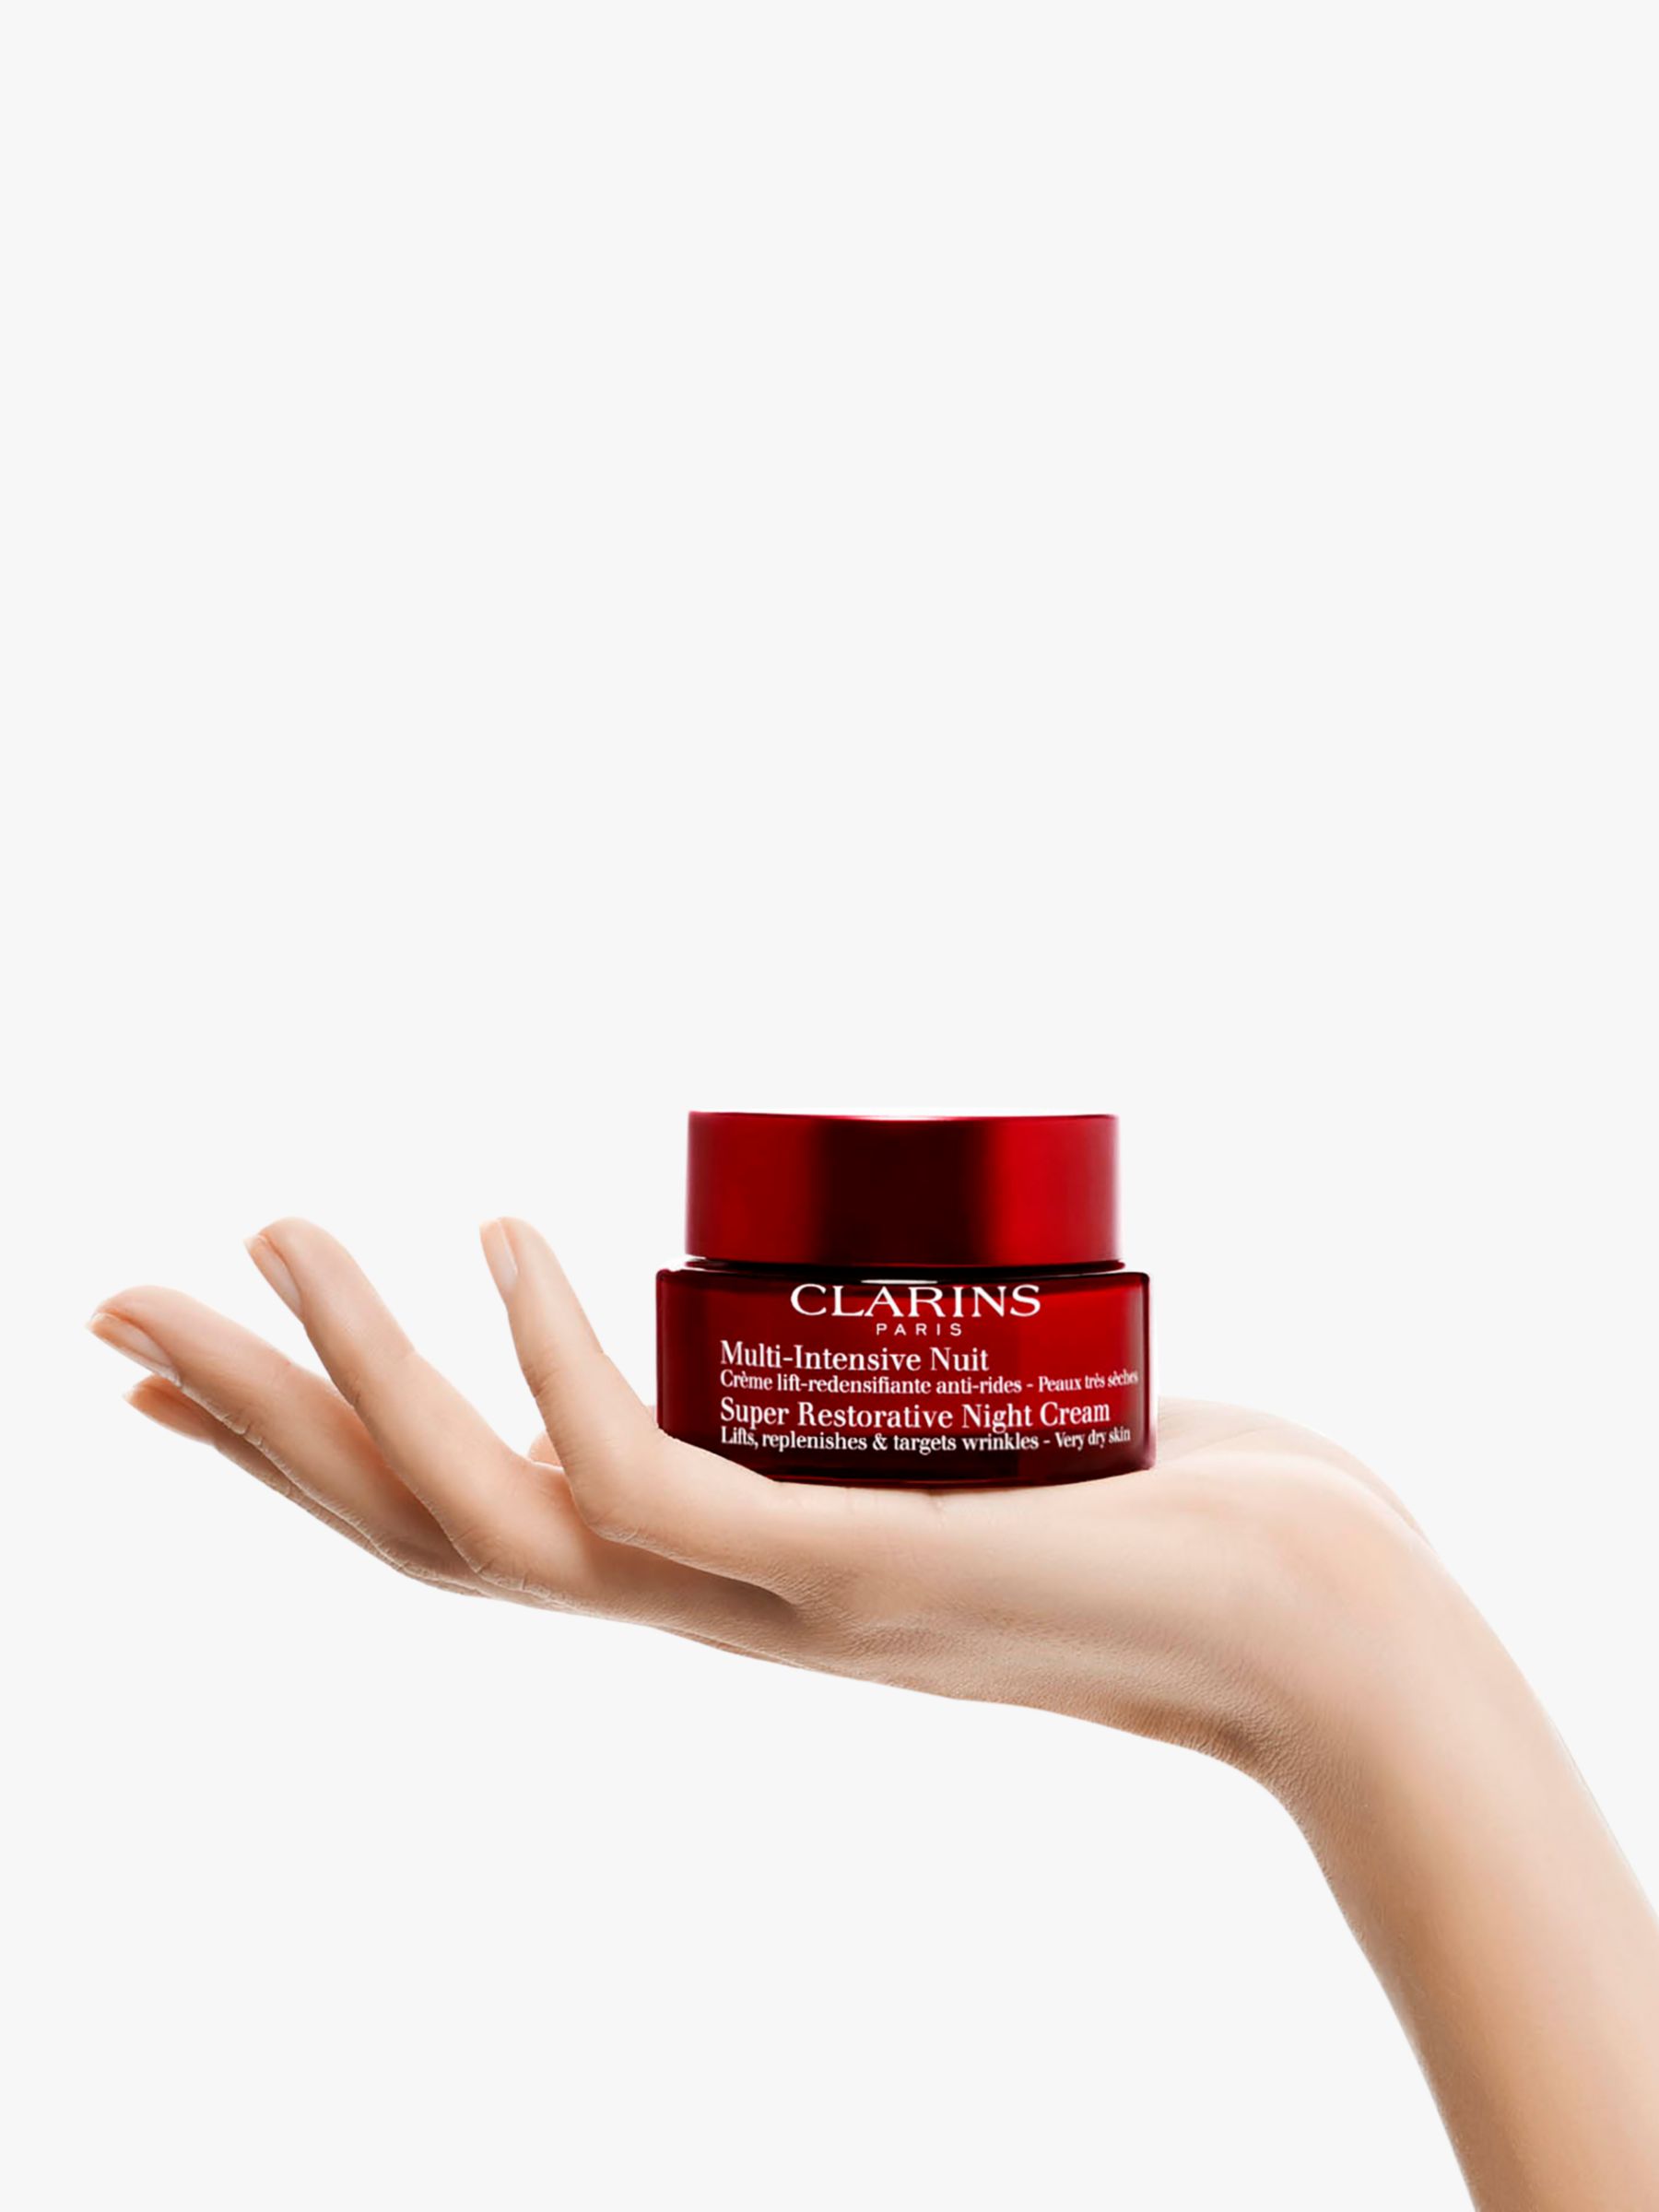 Clarins Super Restorative Night Cream, Very Dry Skin, 50ml 4